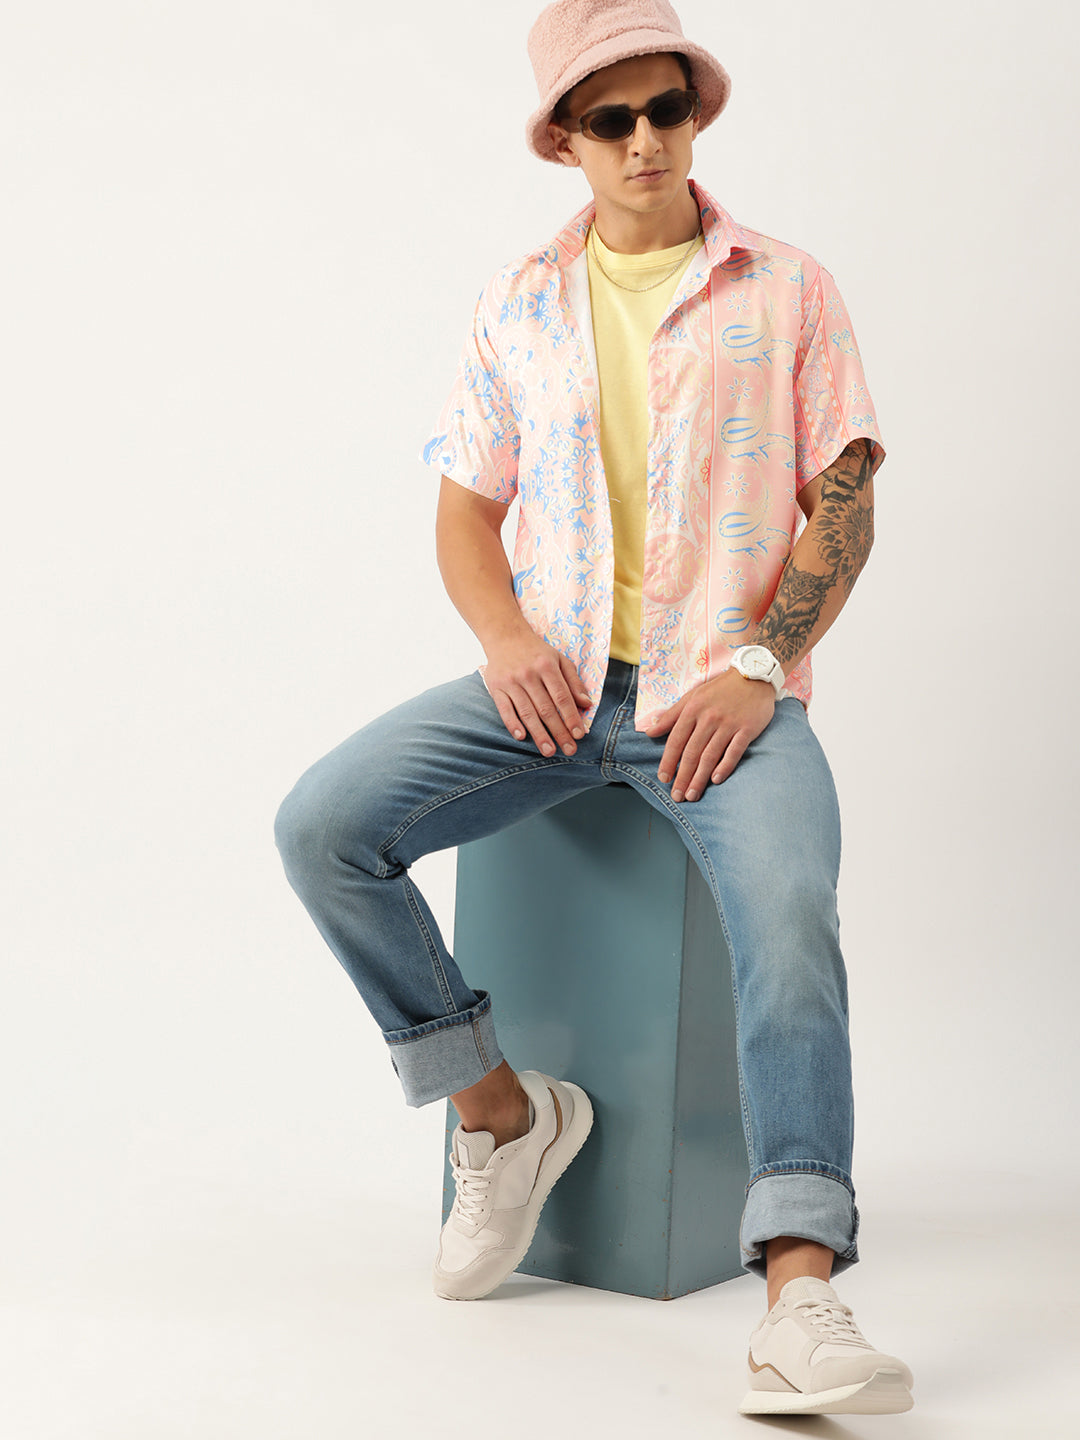 Luxrio Men's Printed Slim Fit Half Sleeves Cotton Casual Shirt